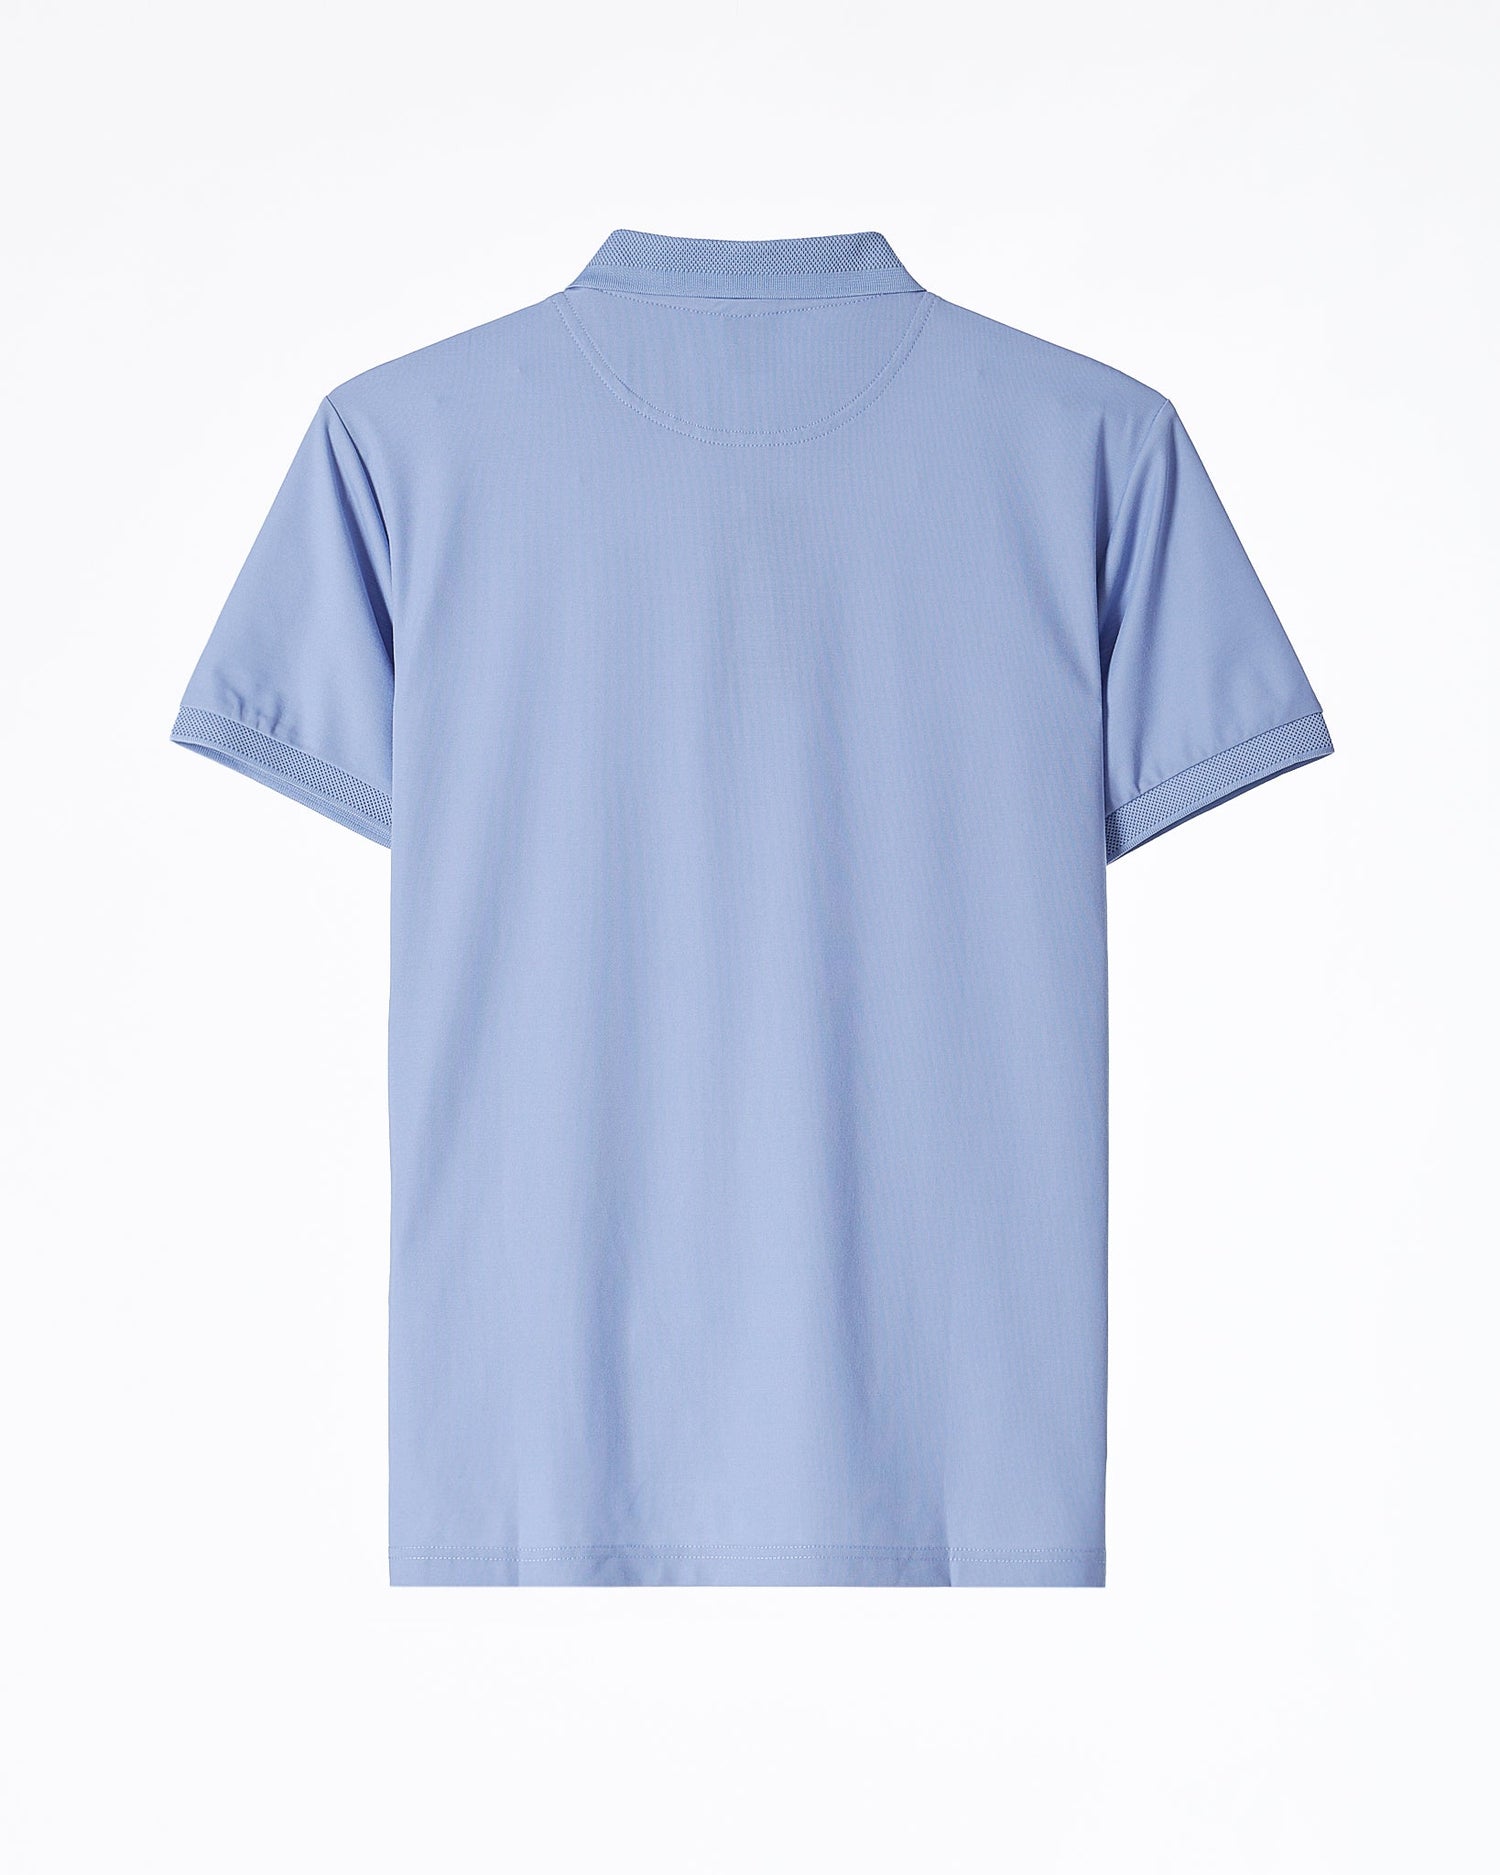 MOI OUTFIT-Boss Men Blue Polo Shirt 22.90